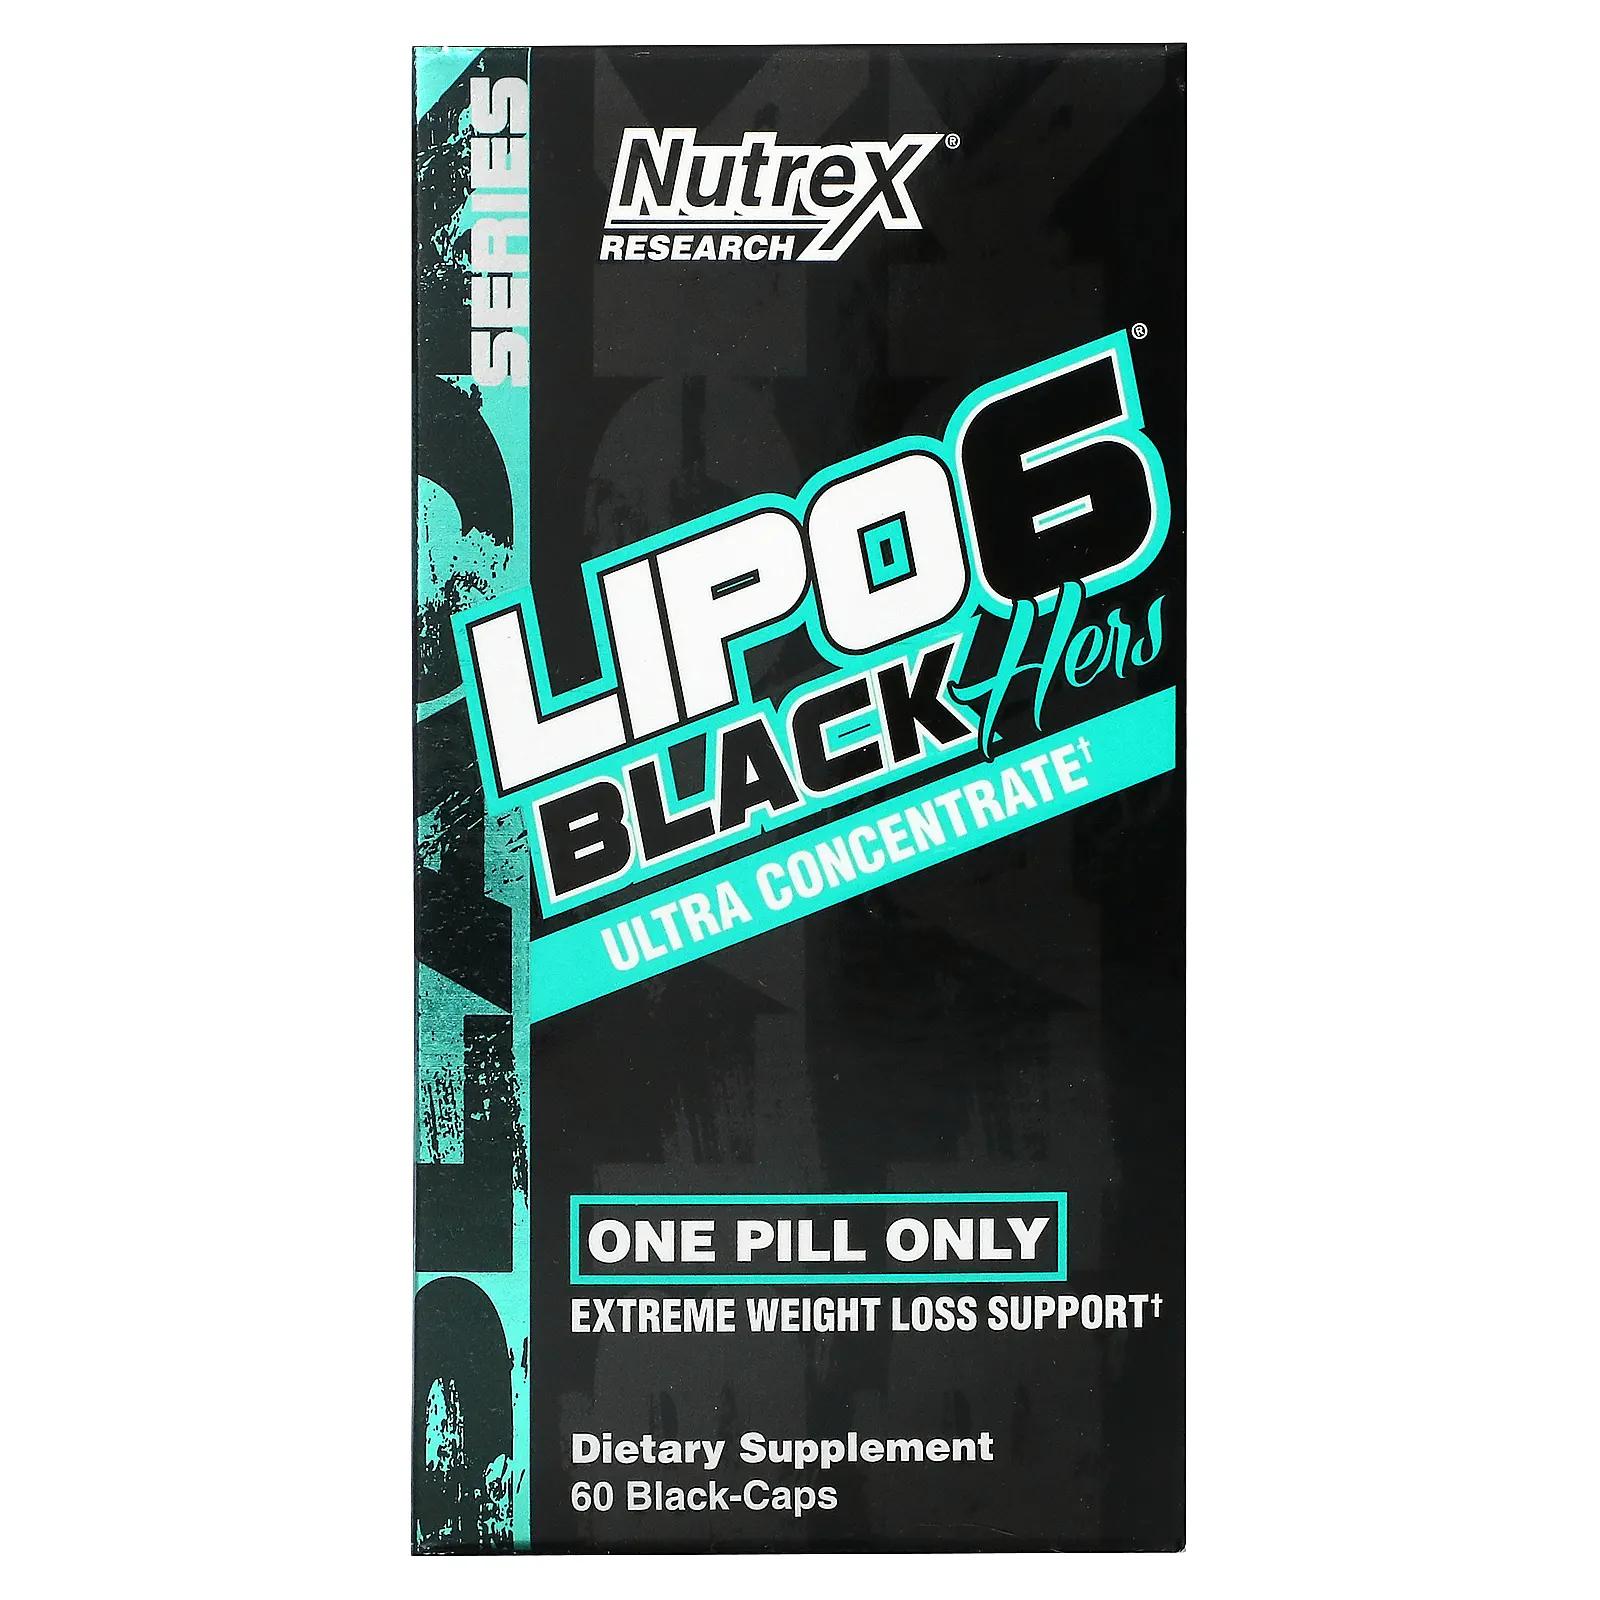 Nutrex Research Lipo-6 Black Hers ультраконцентрированный 60 черных капсул nutrex research black series мелатонин 100 таблеток